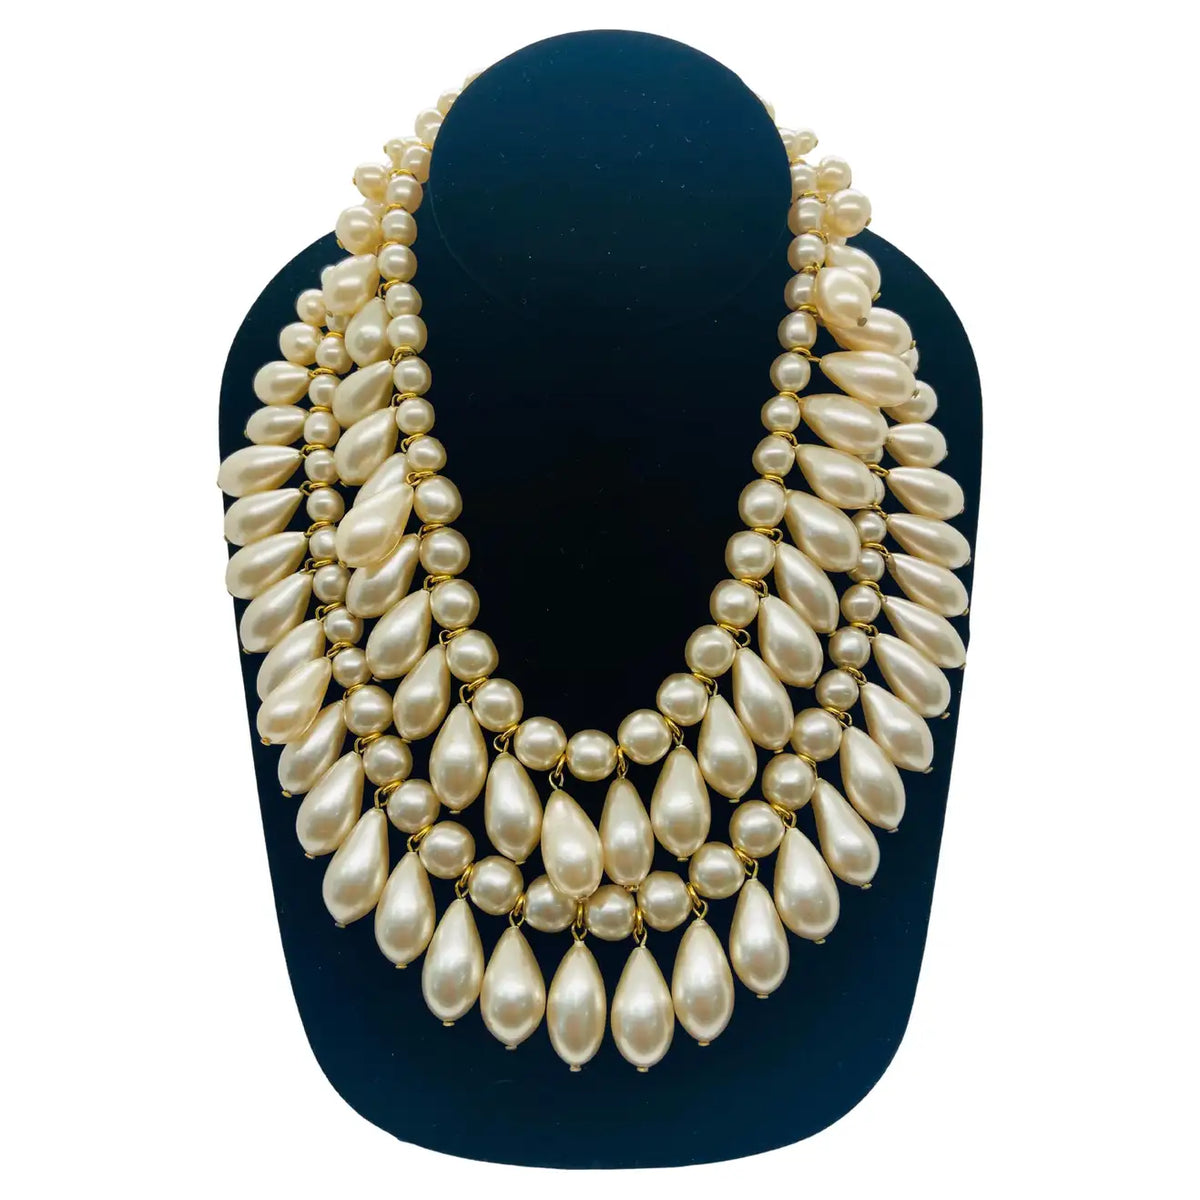 chanel black pearl necklace vintage